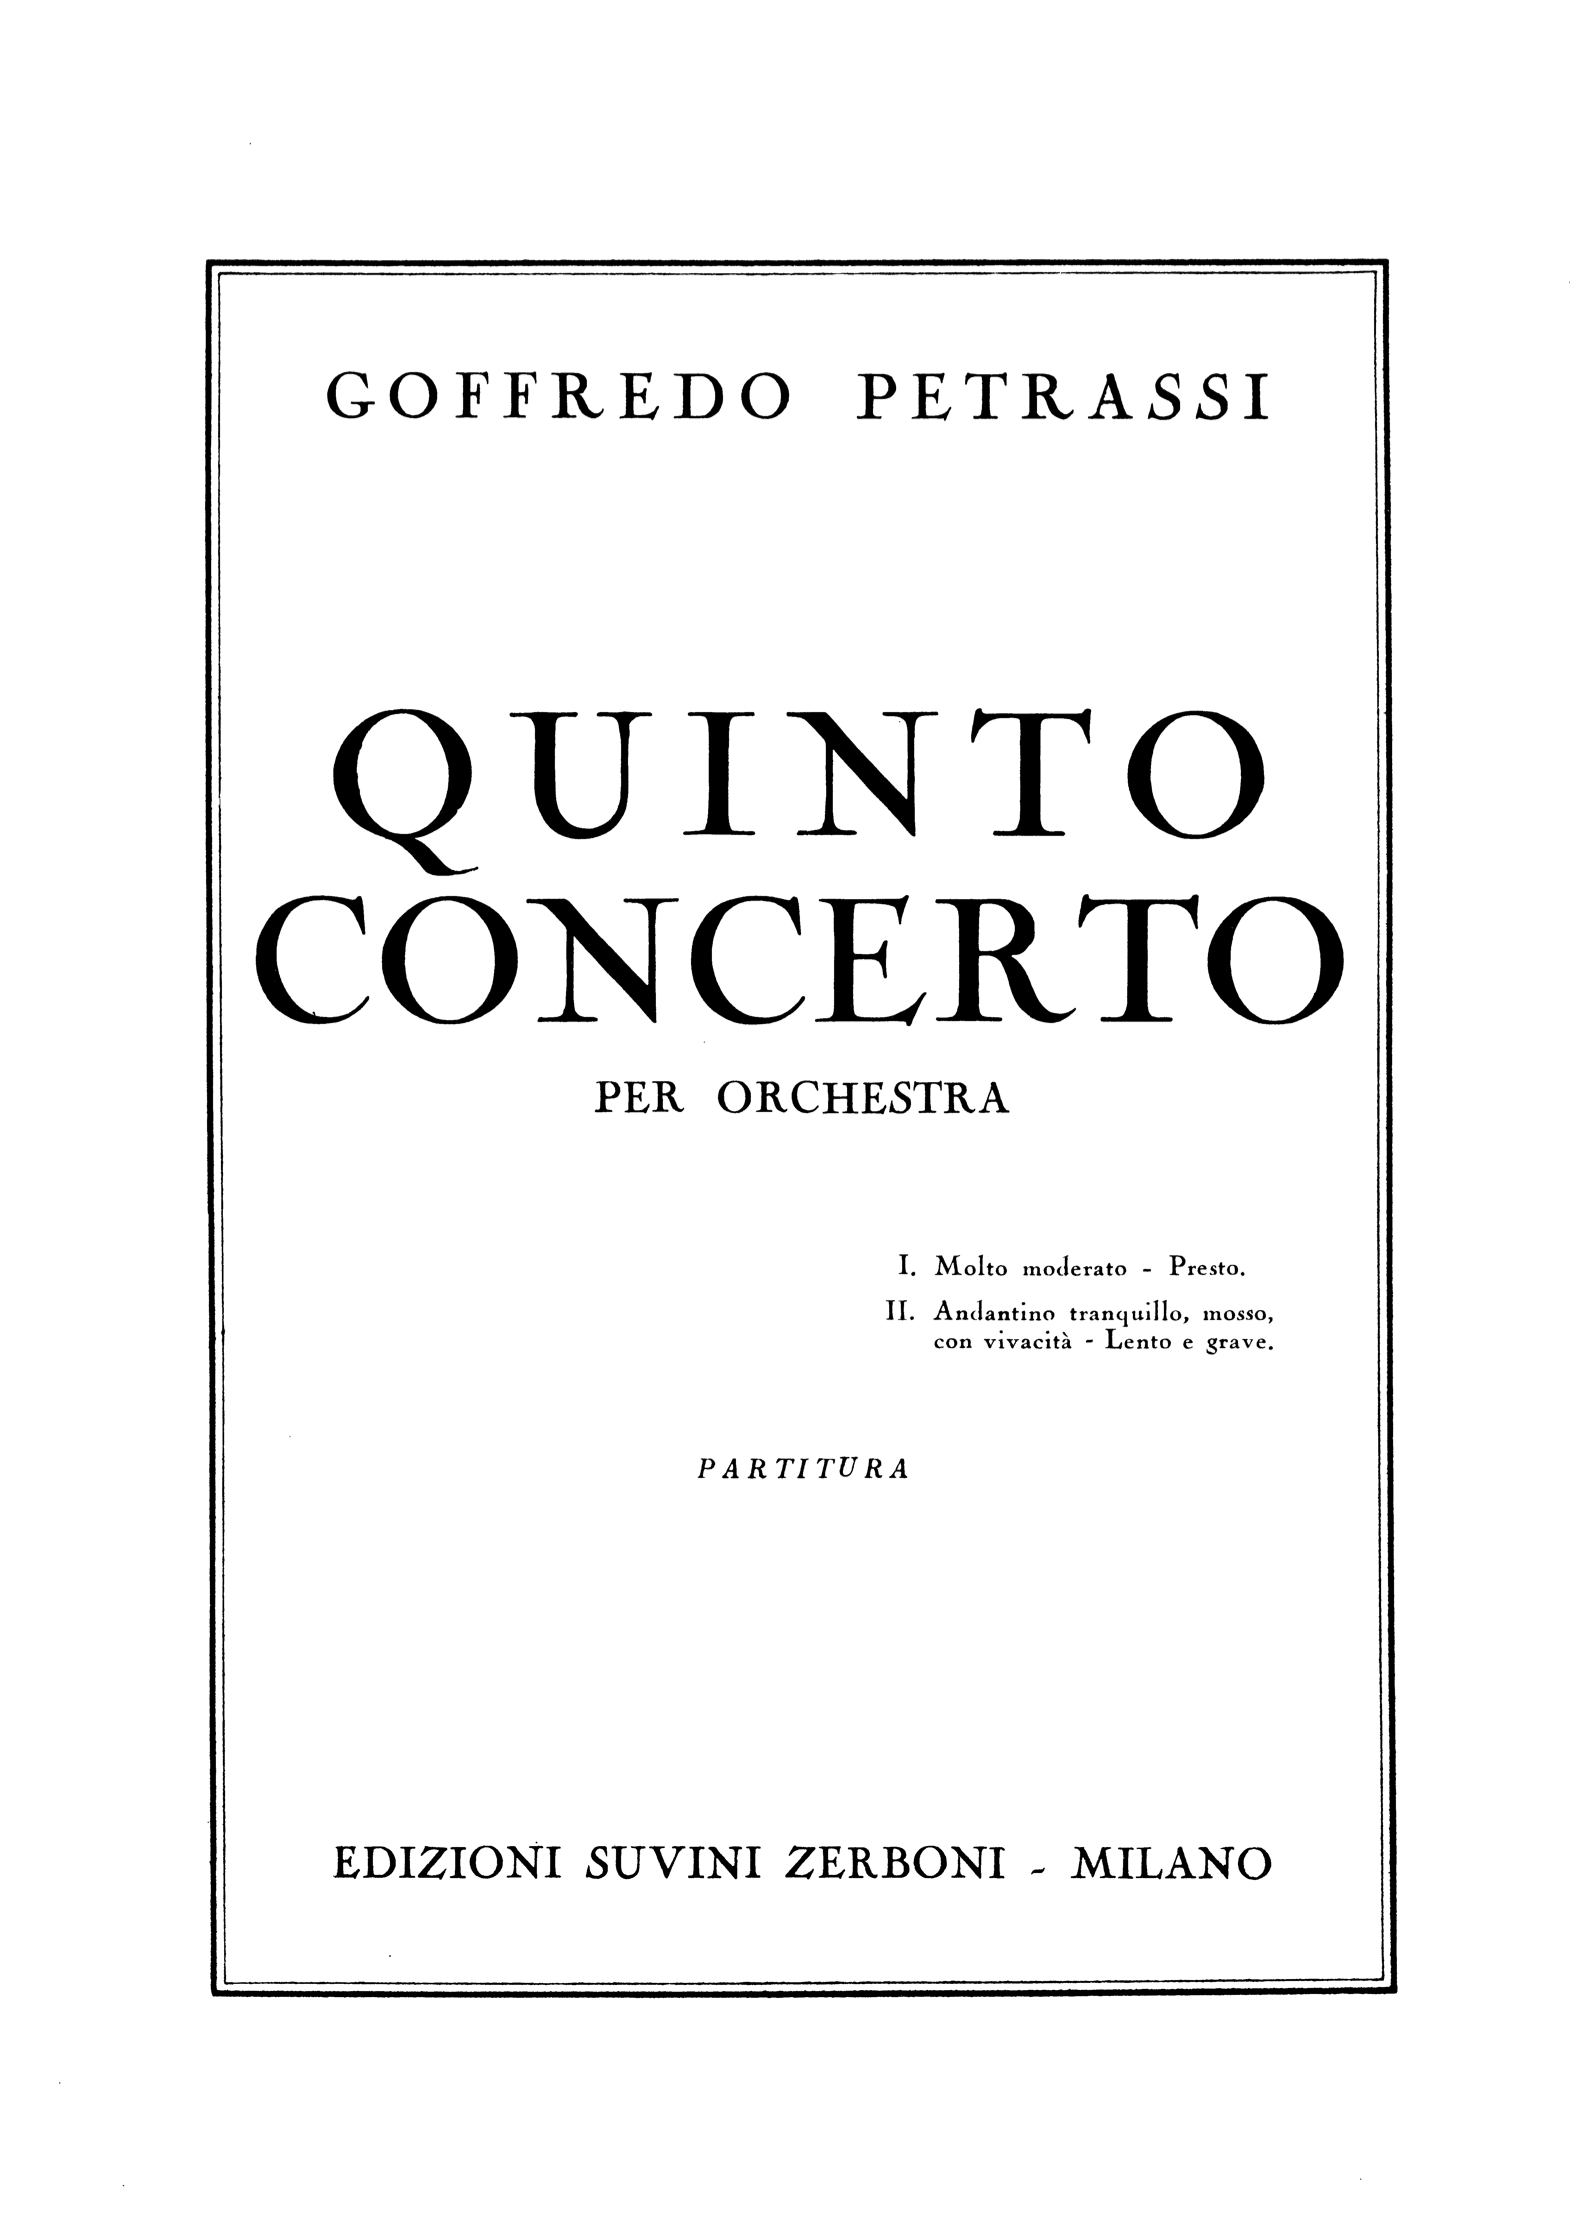 Quinto concerto_Petrassi 1